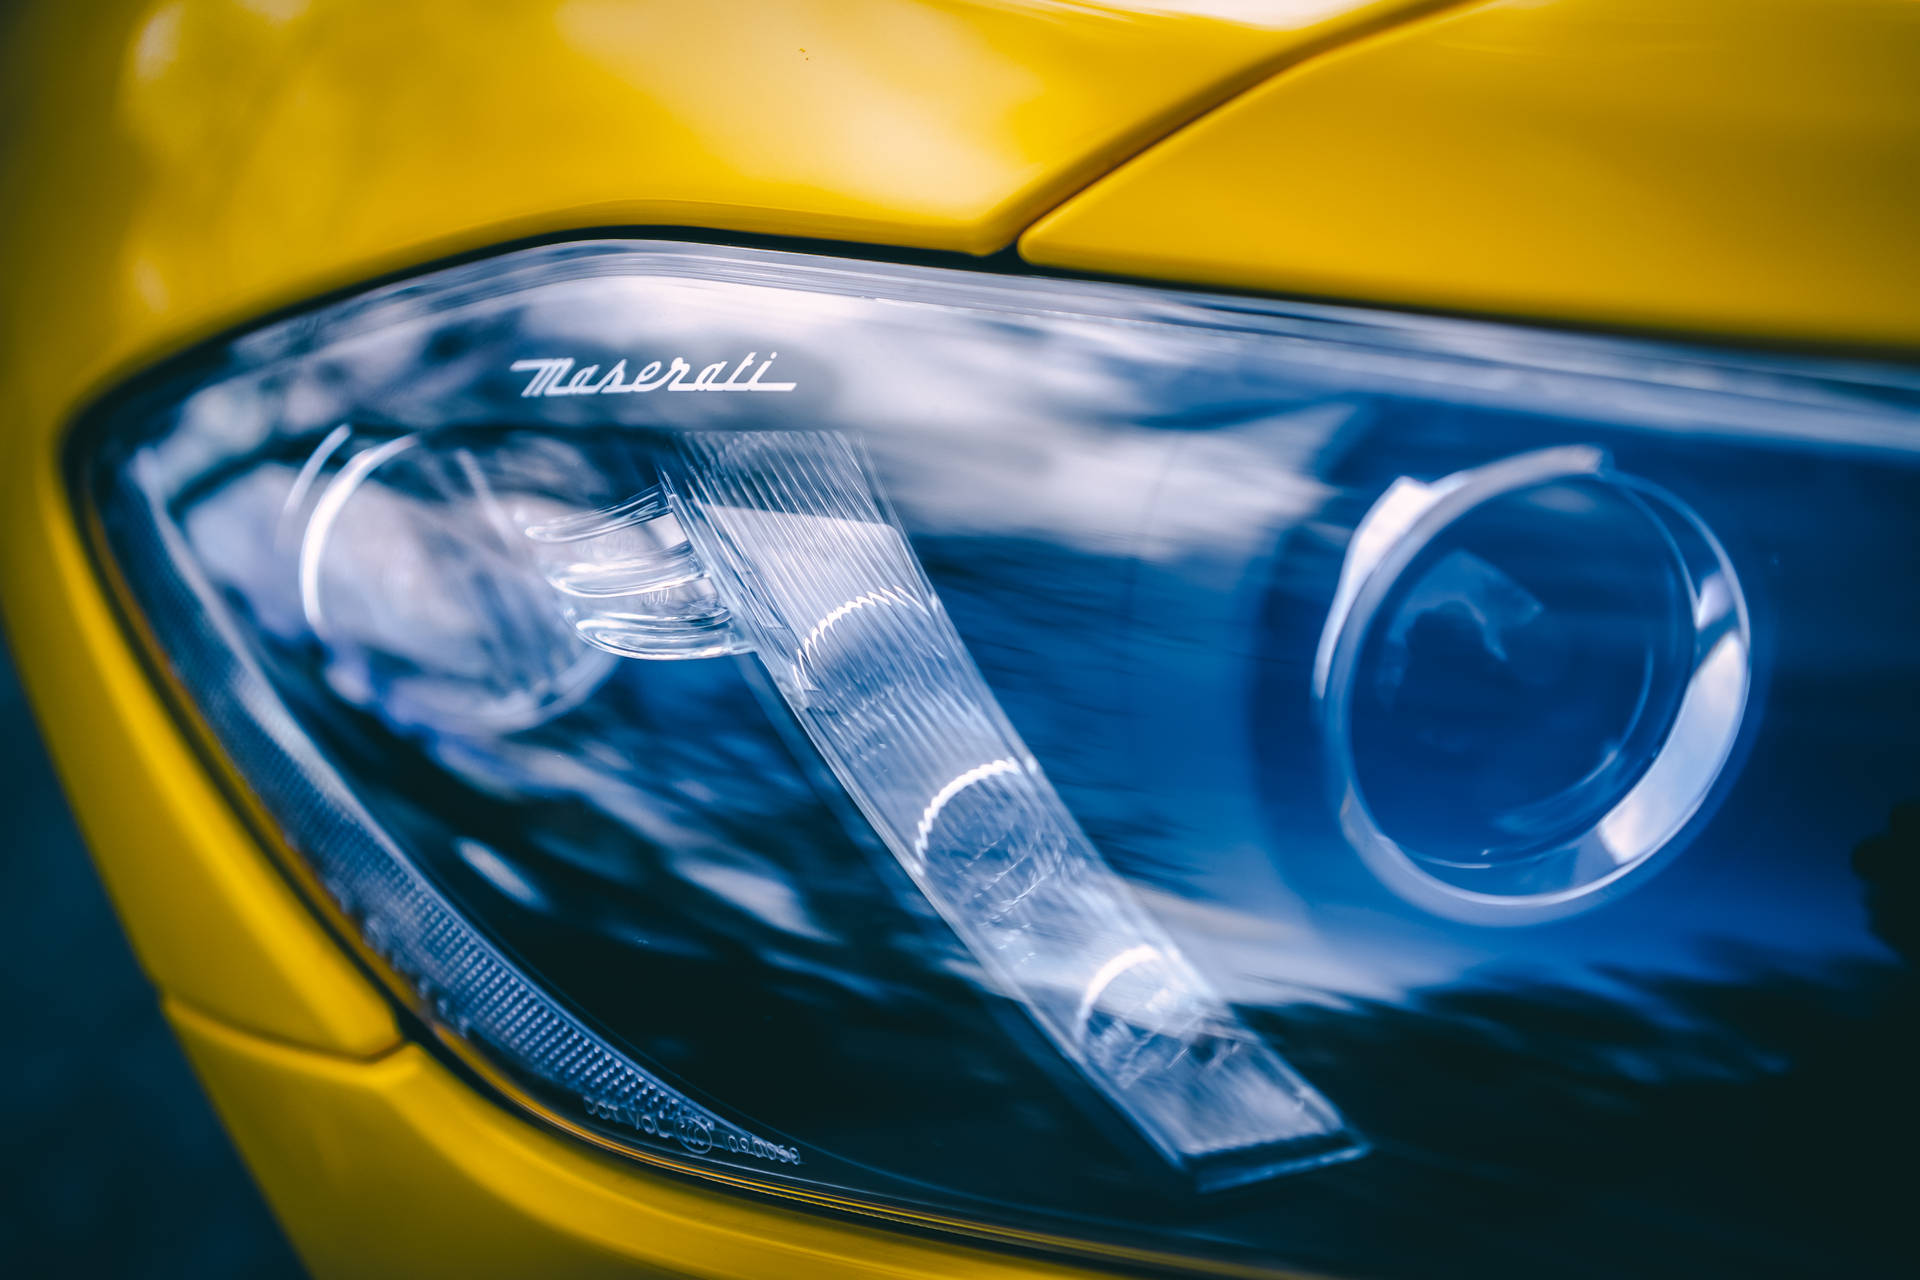 Shiny Maserati Headlight Background